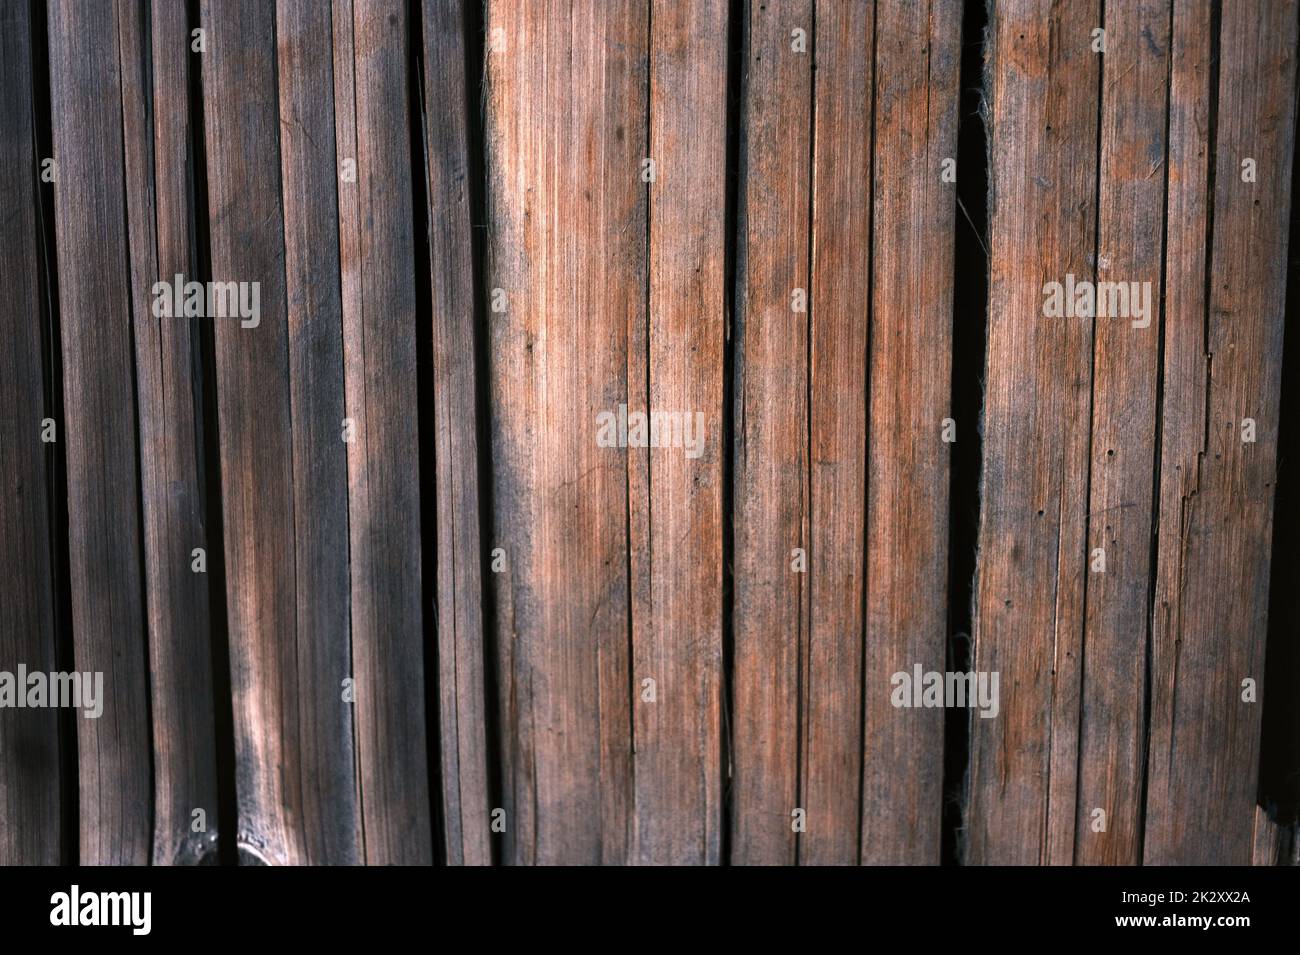 Bambú viejo textura madera natural patrones marrón. Foto de stock